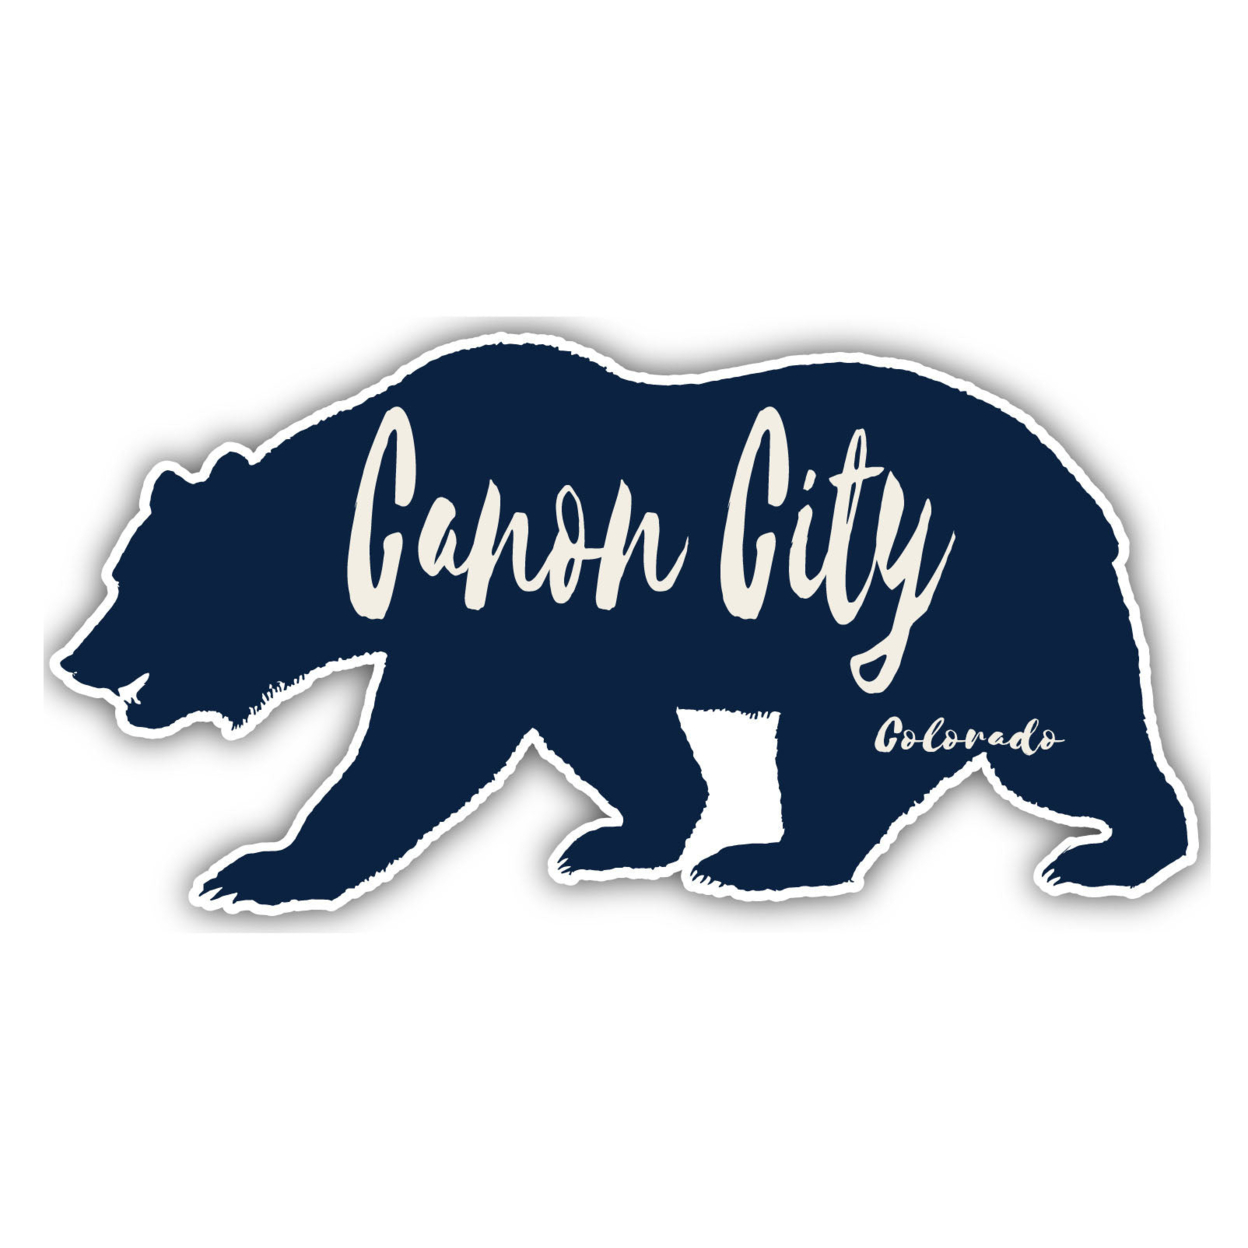 Canon City Colorado Souvenir Decorative Stickers (Choose Theme And Size) - Single Unit, 12-Inch, Tent